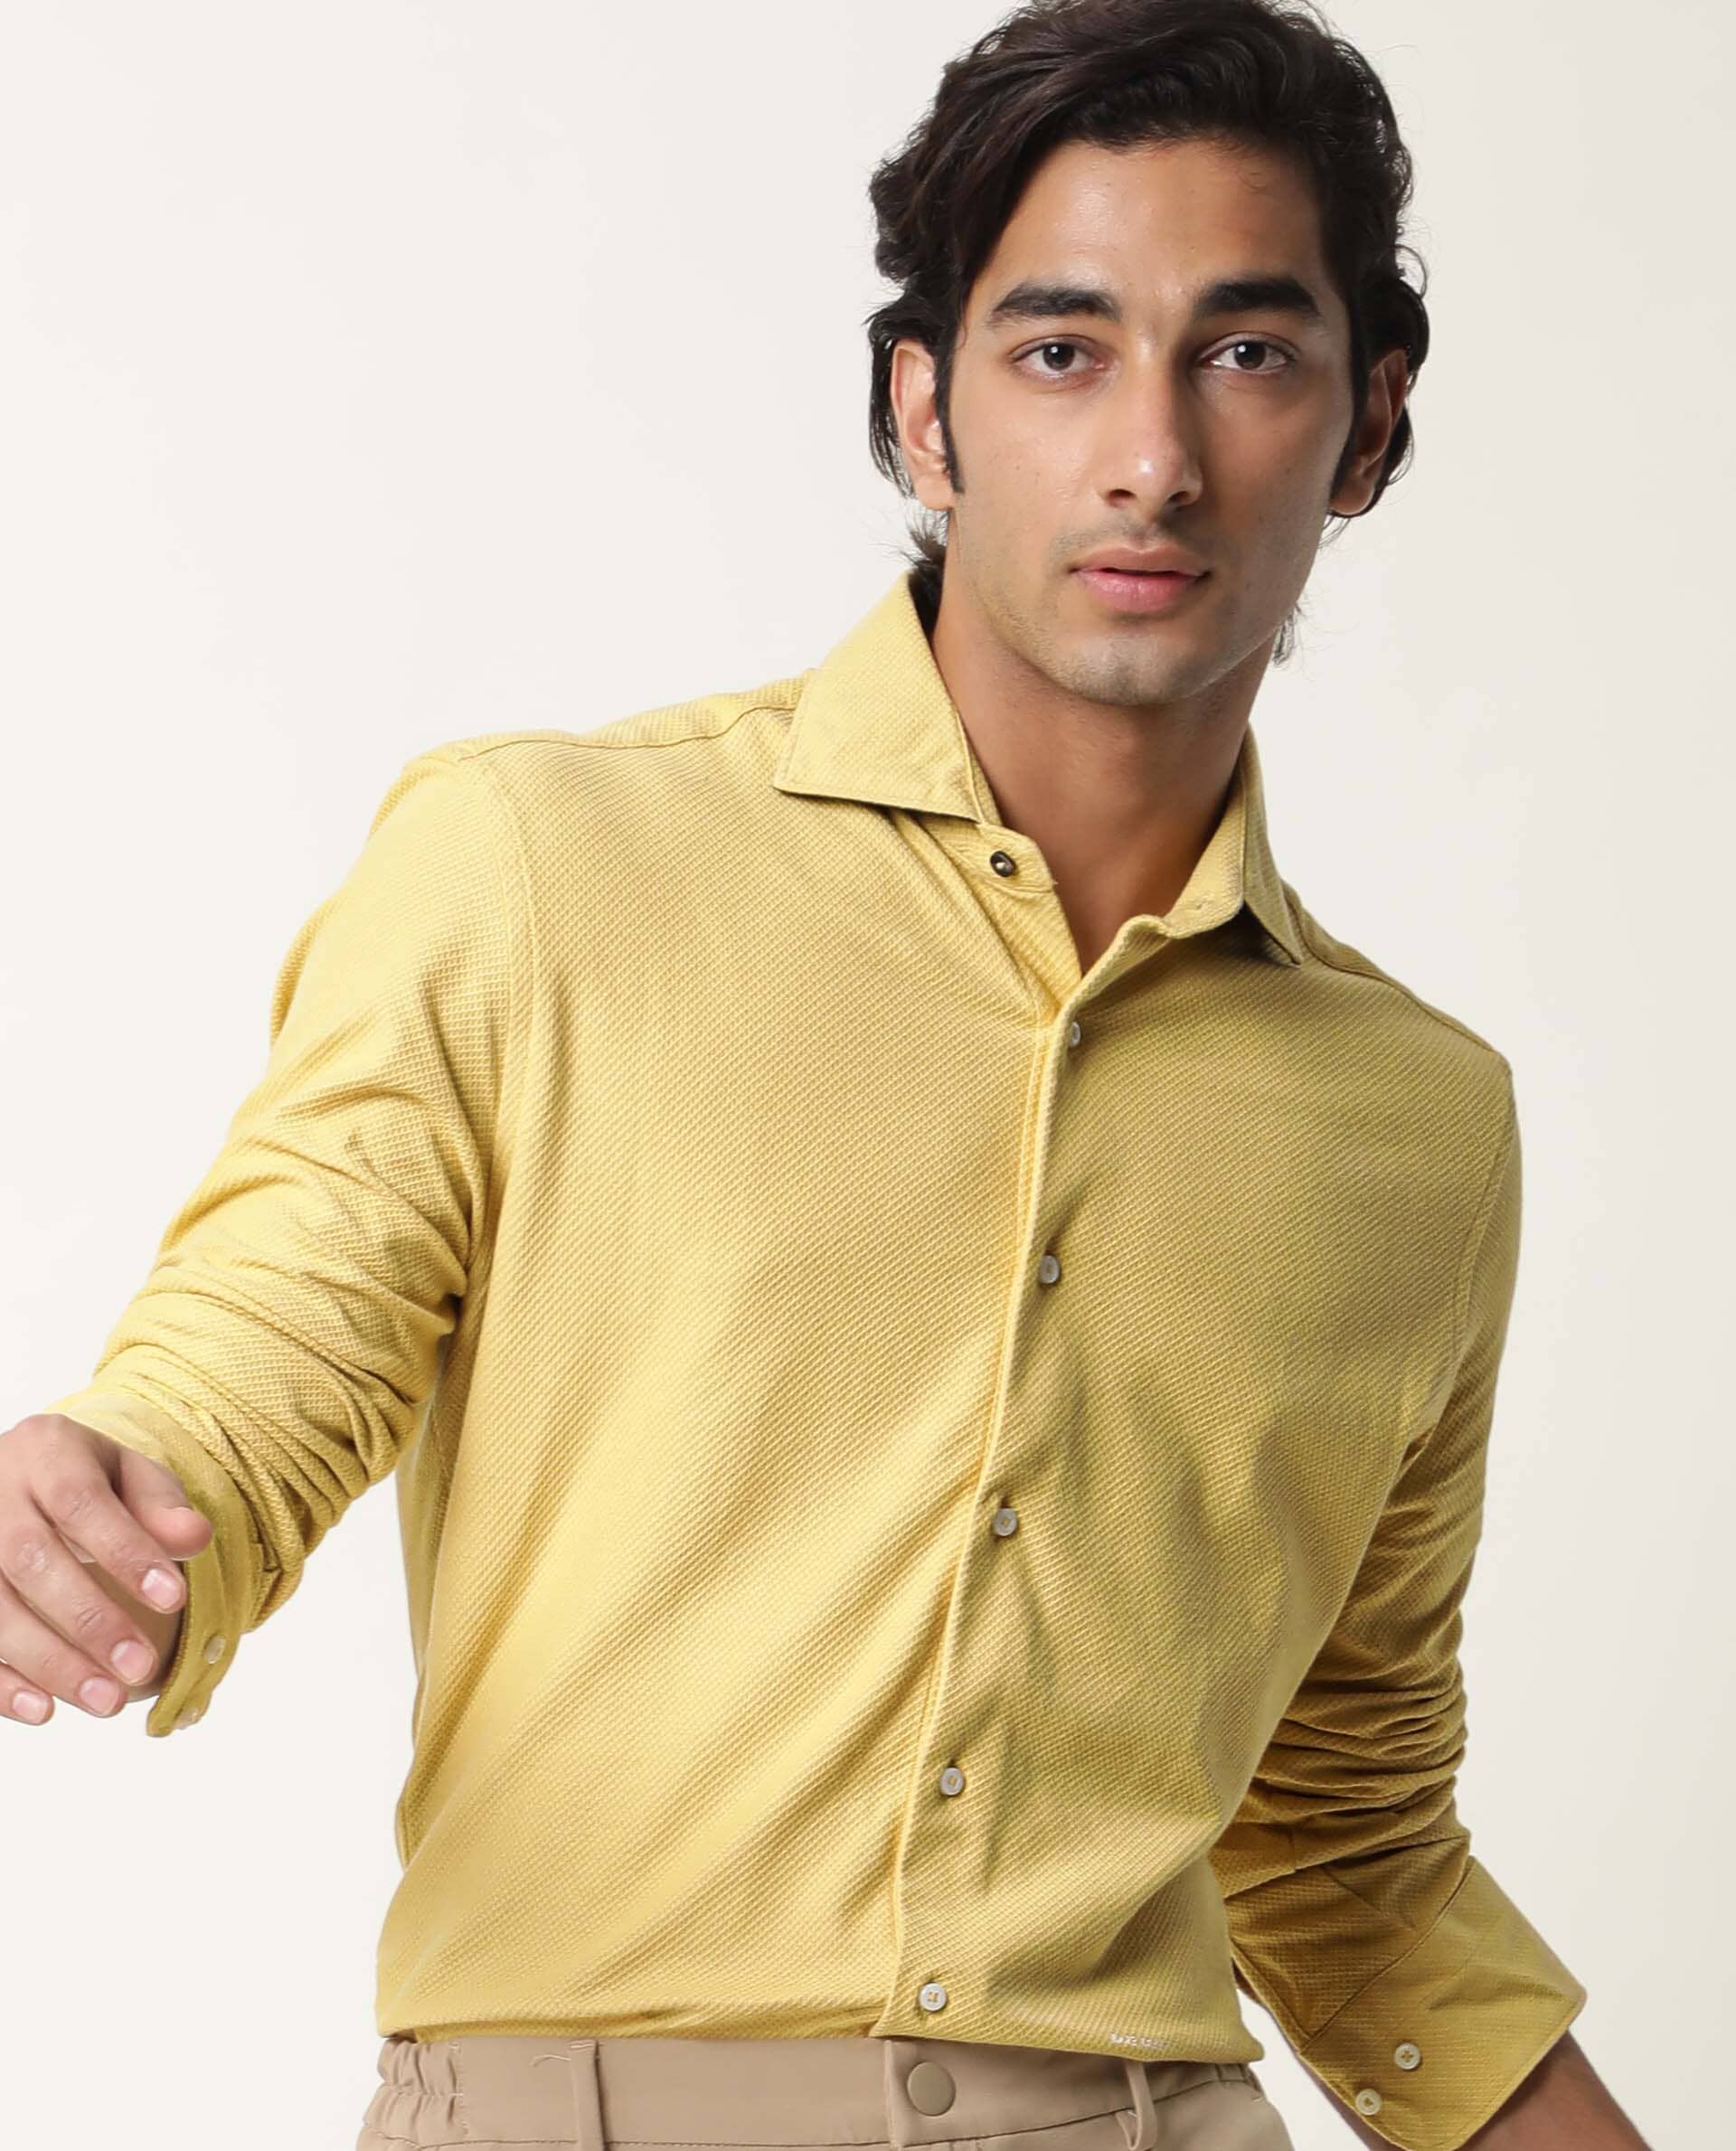 Yellow Shirt Matching Pant Ideas | Yellow Shirts Combination Pants -  TiptopGents